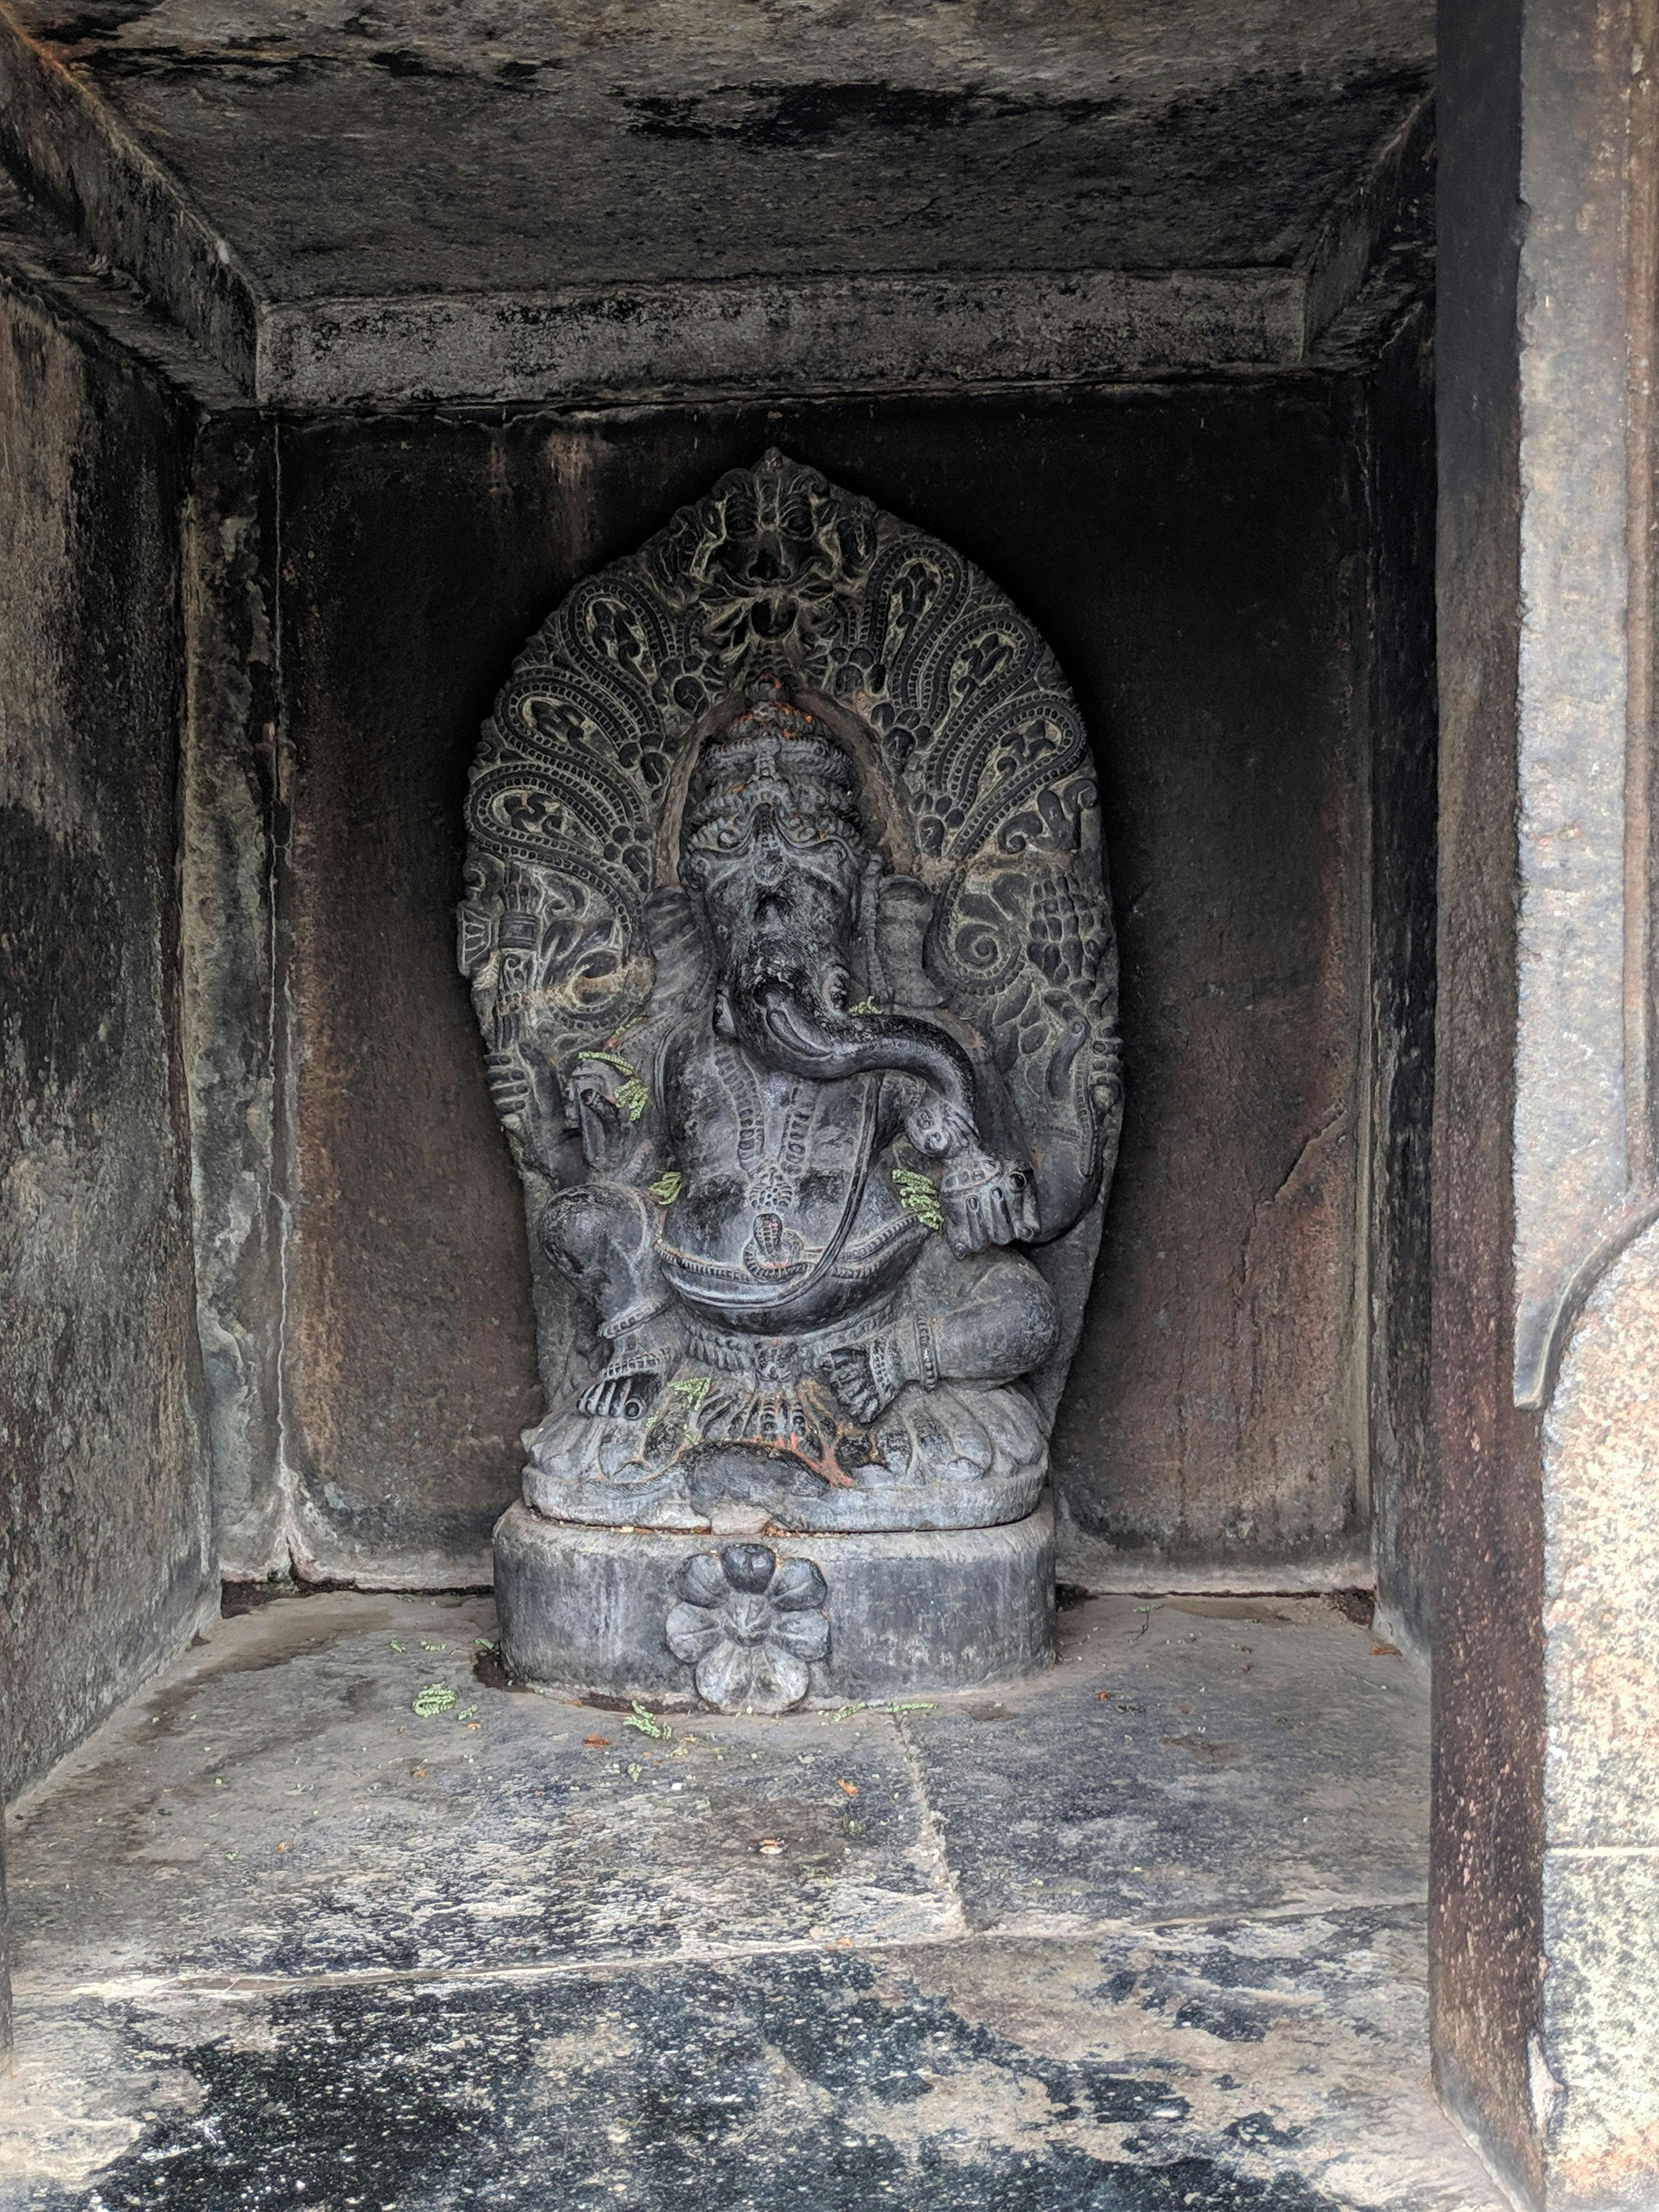 A Ganesha statue